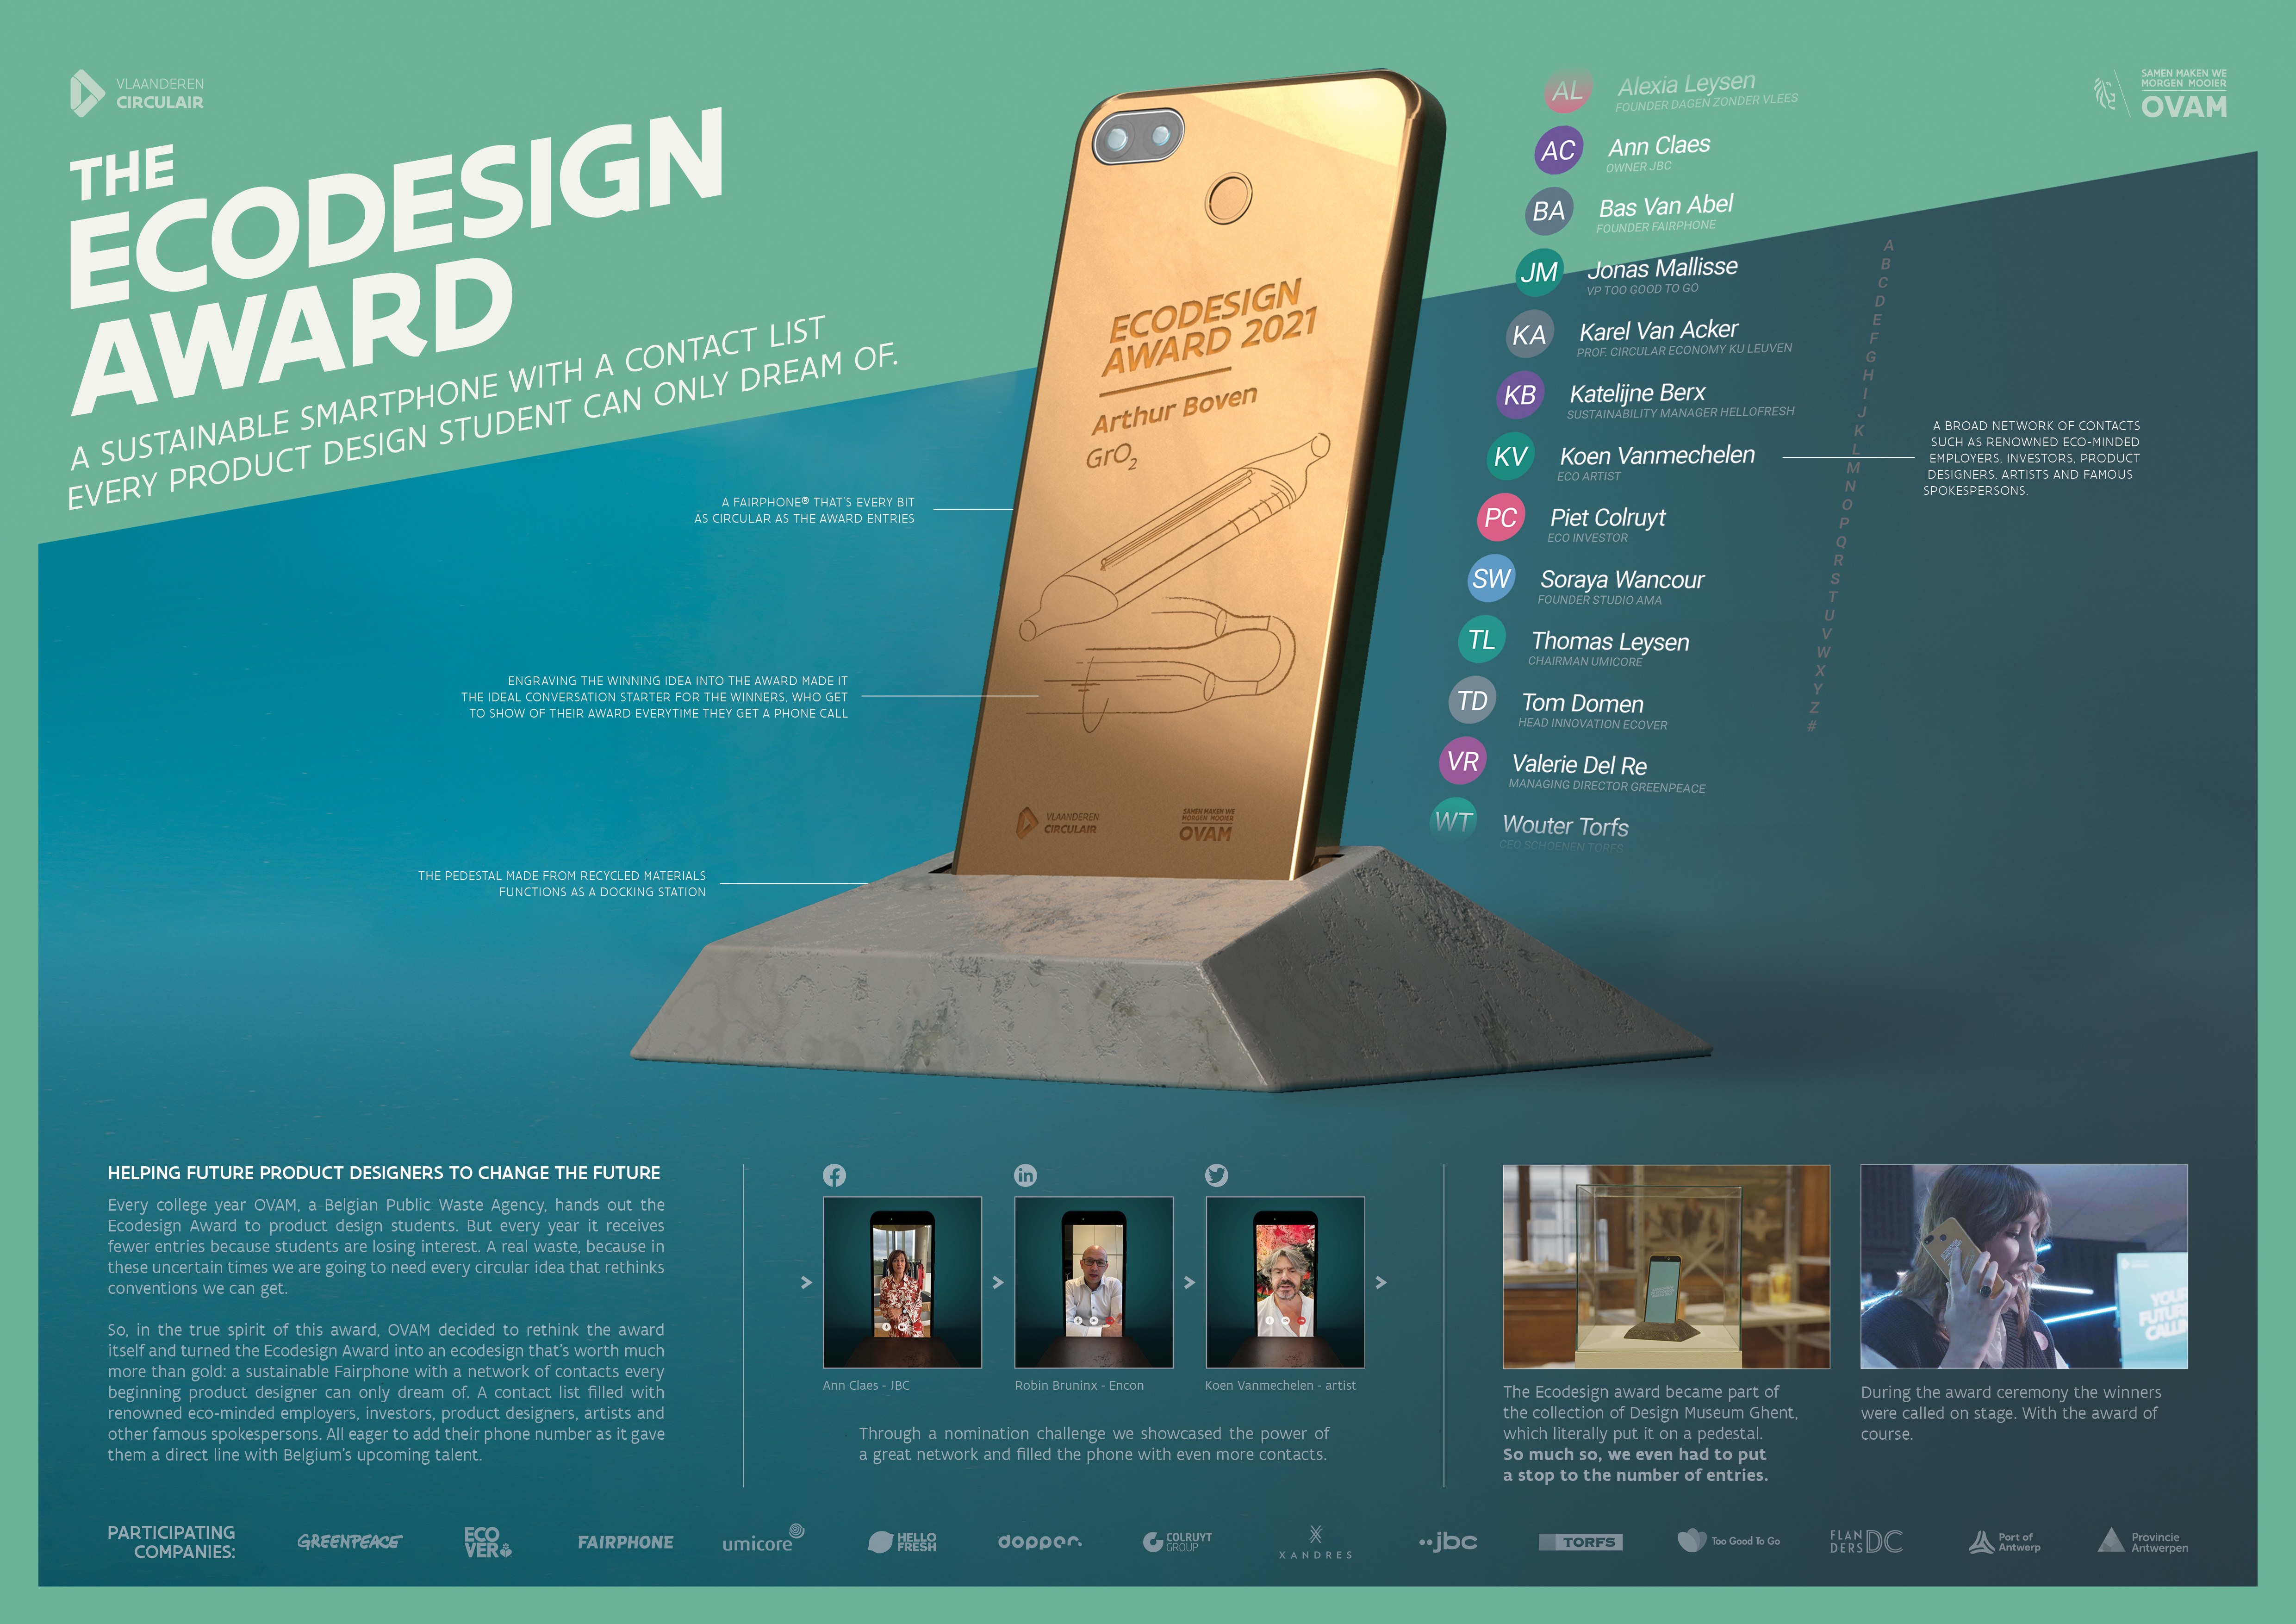 The Ecodesign Award